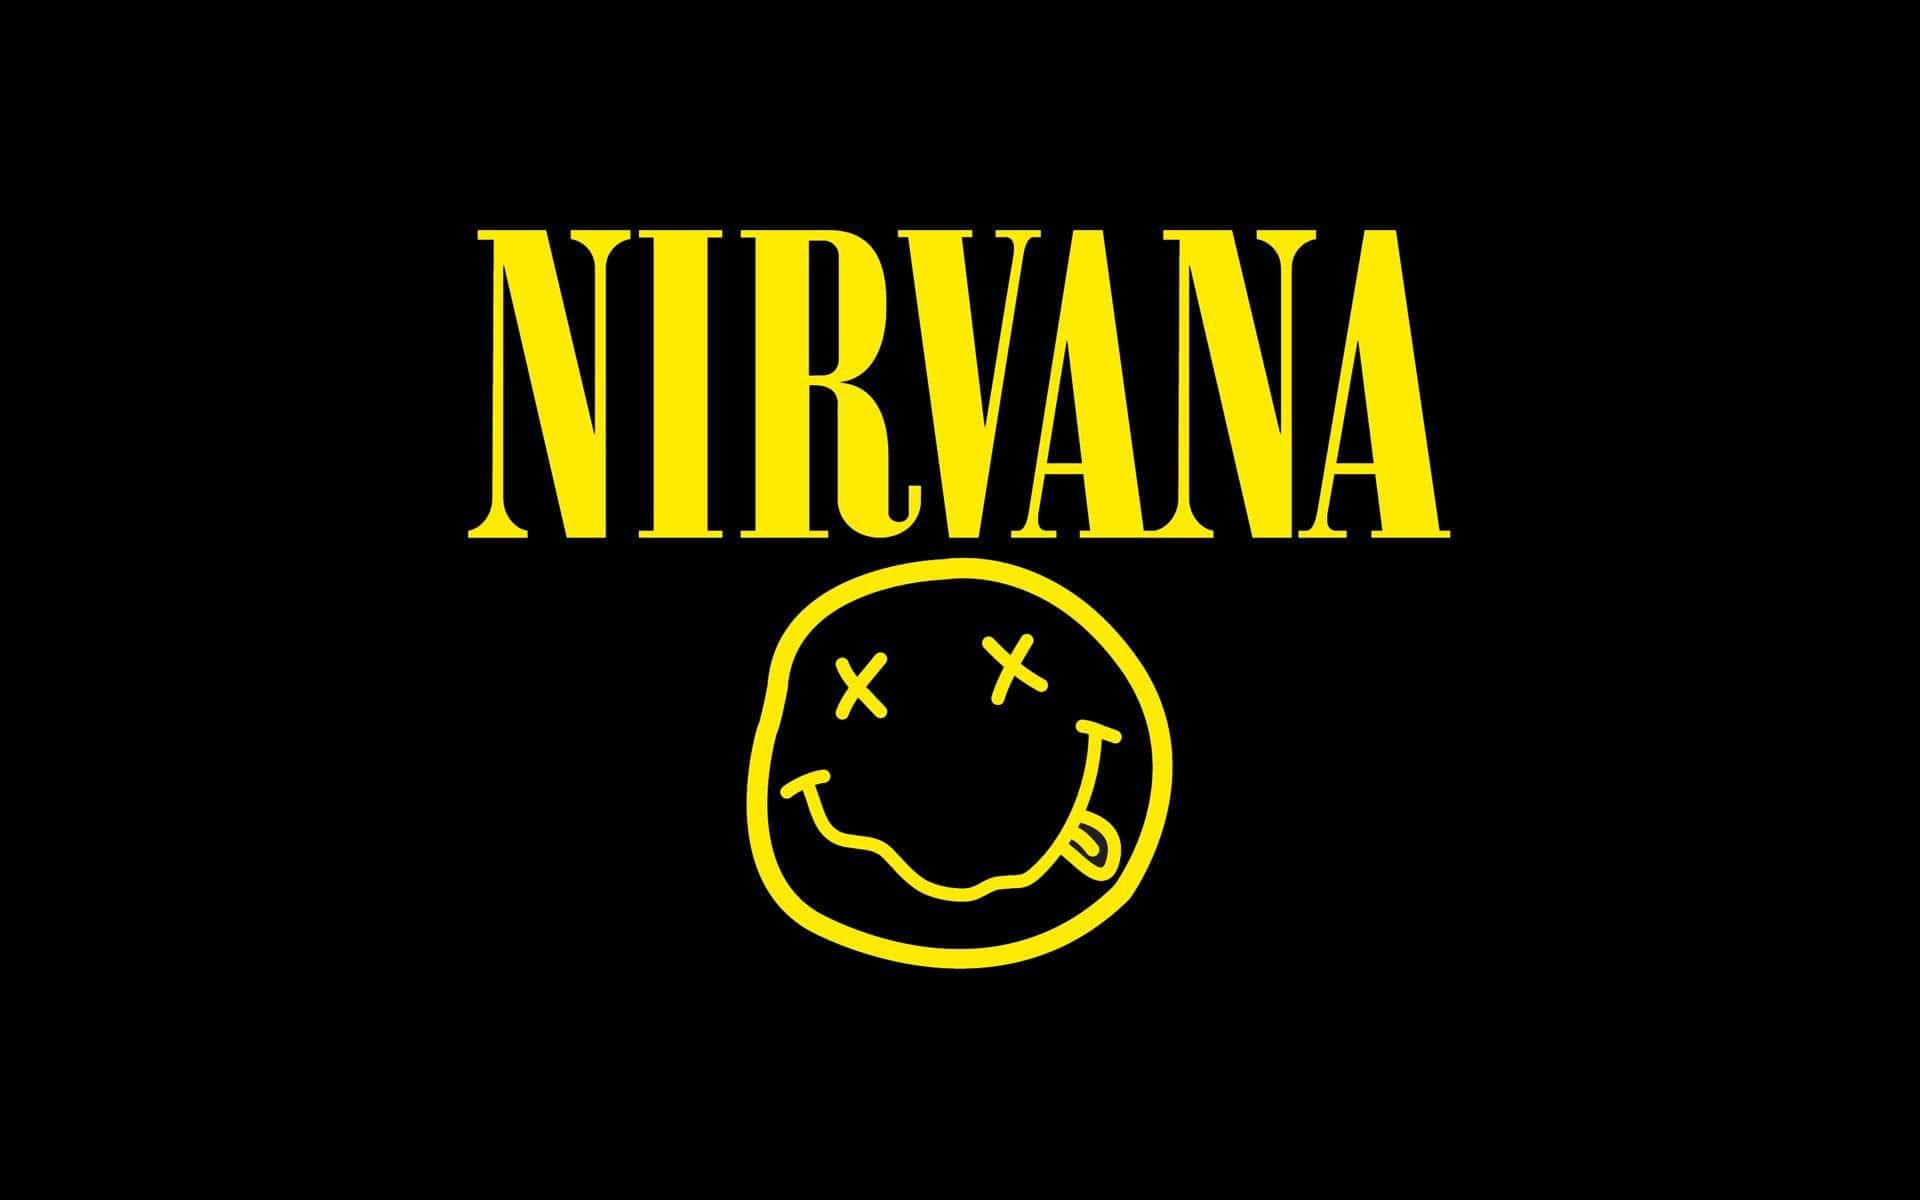 Iconic Nirvana Band in Black&White